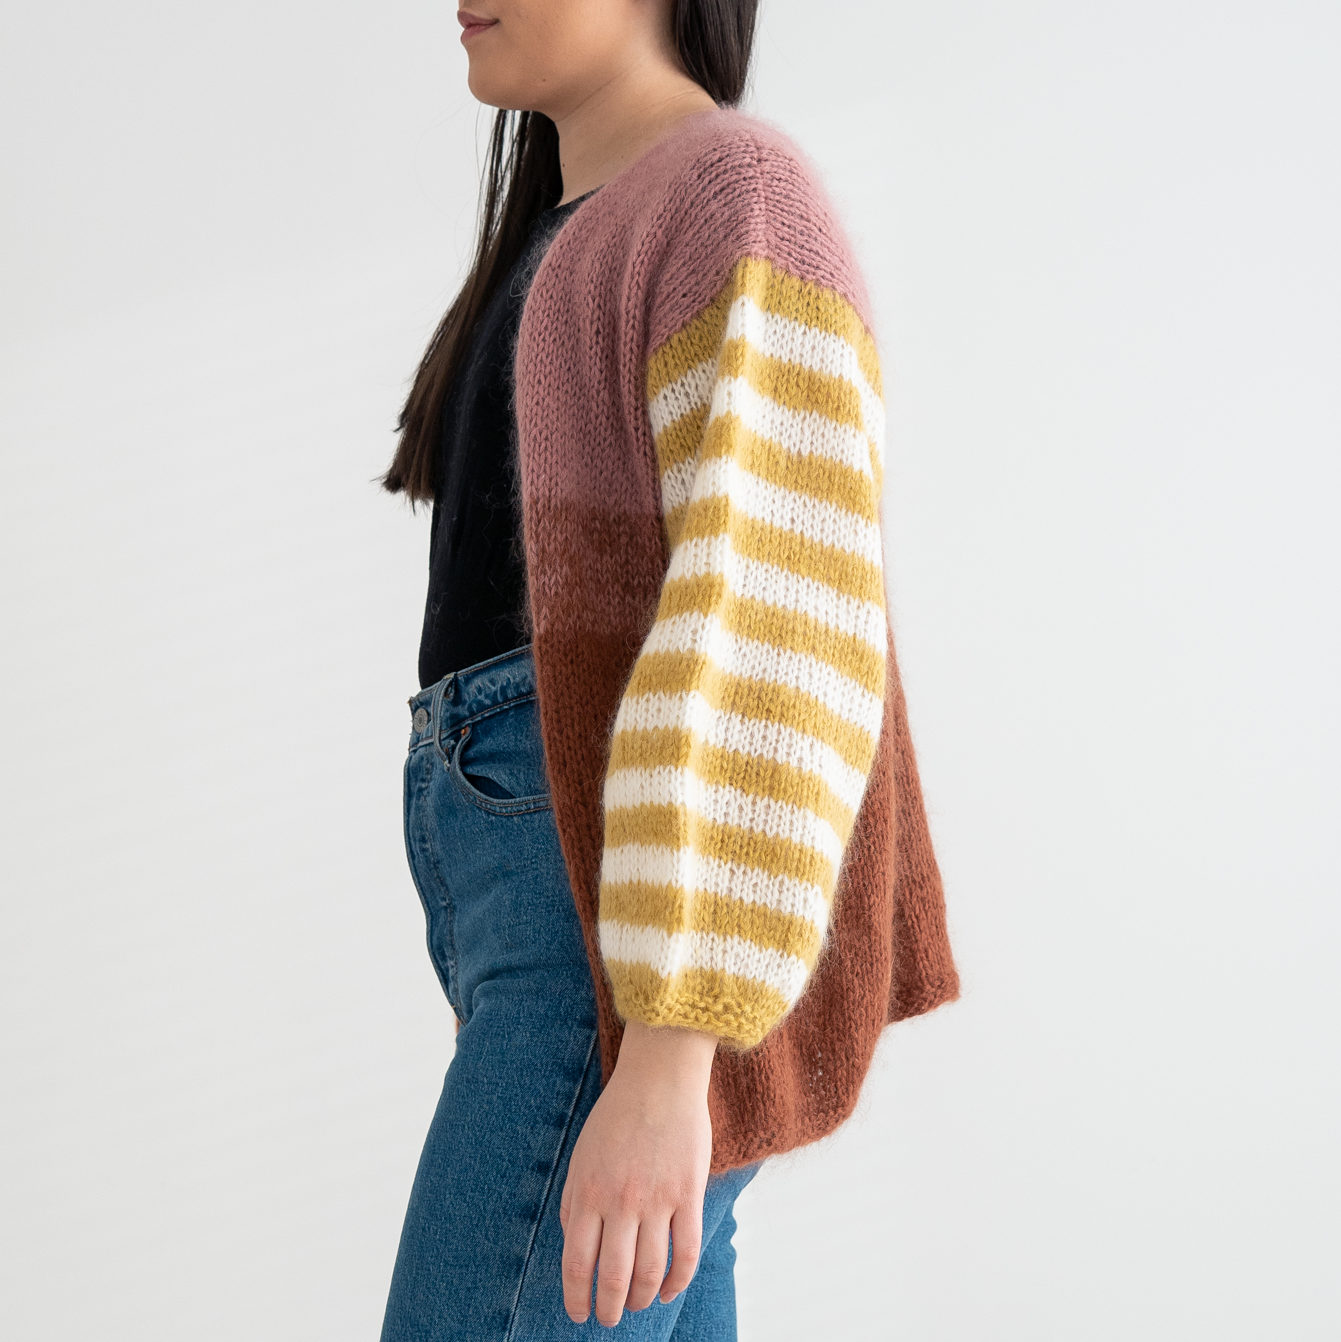  - Paradise jacket knitting pattern | Knitted jacket - by HipKnitShop - 20/04/2020